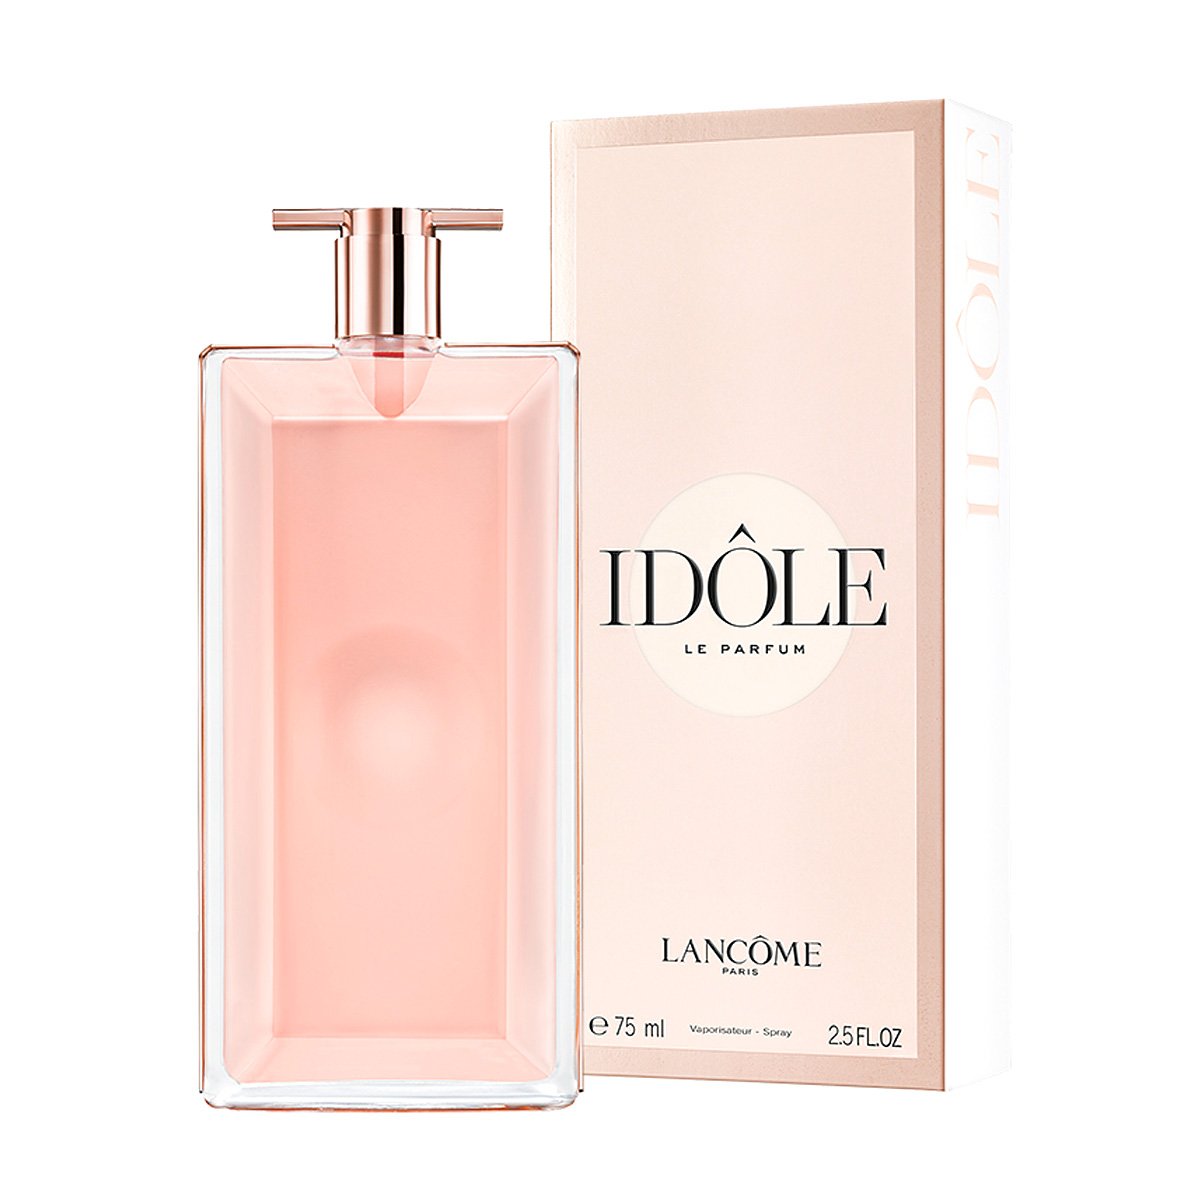 Lancome idole Le Parfum edp